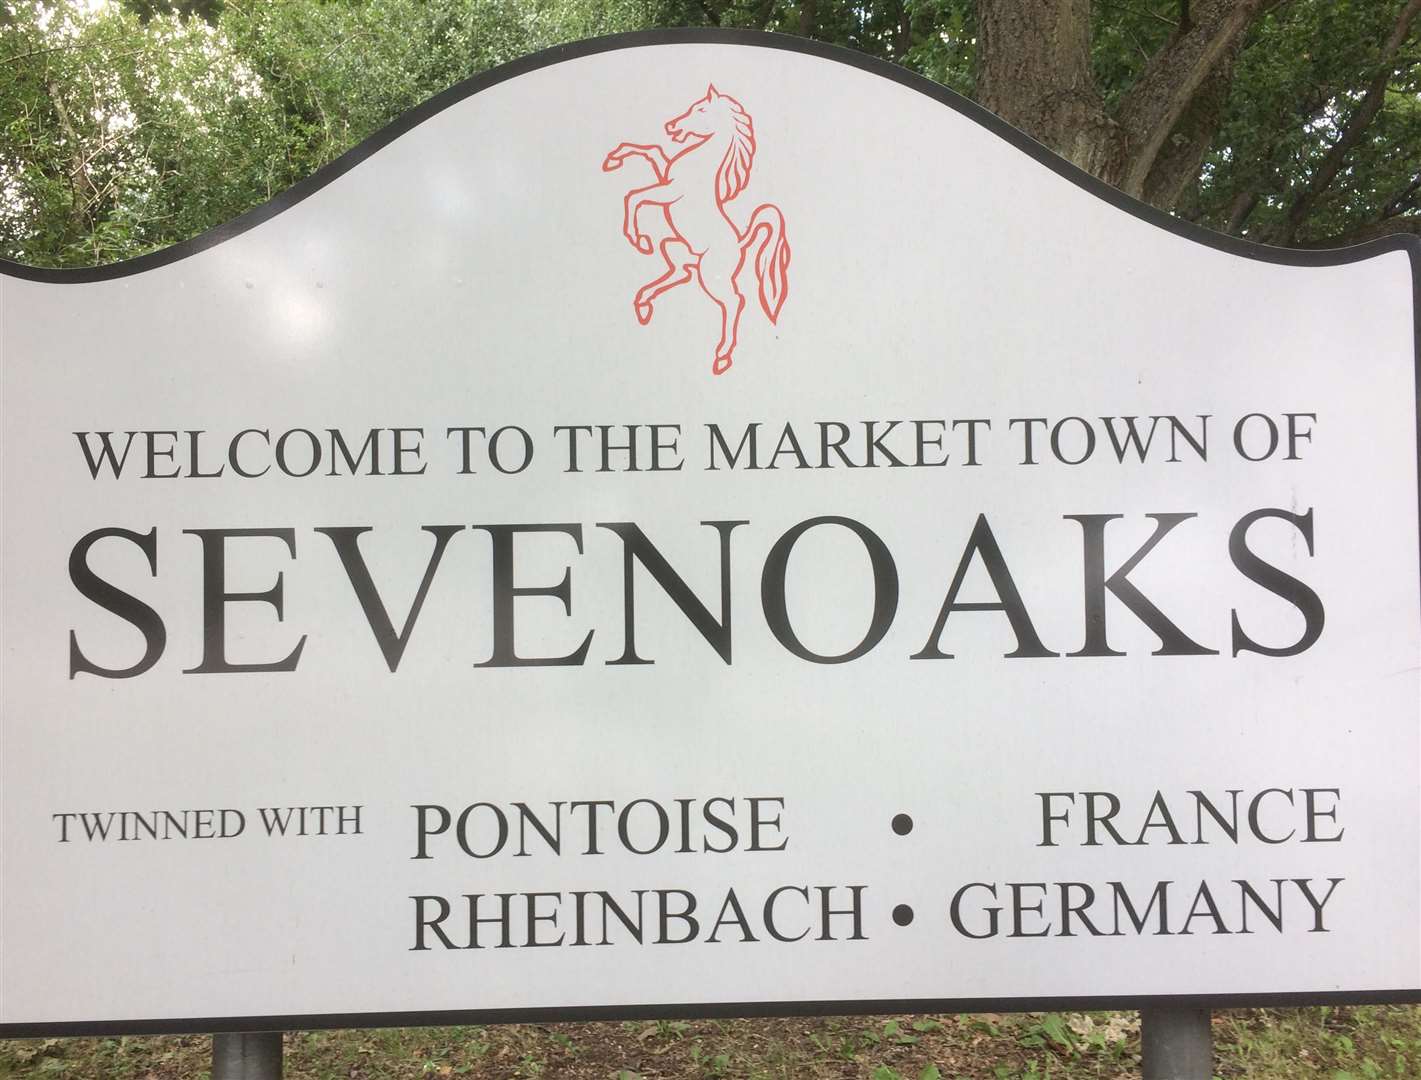 The Sevenoaks sign boasts it is a market town